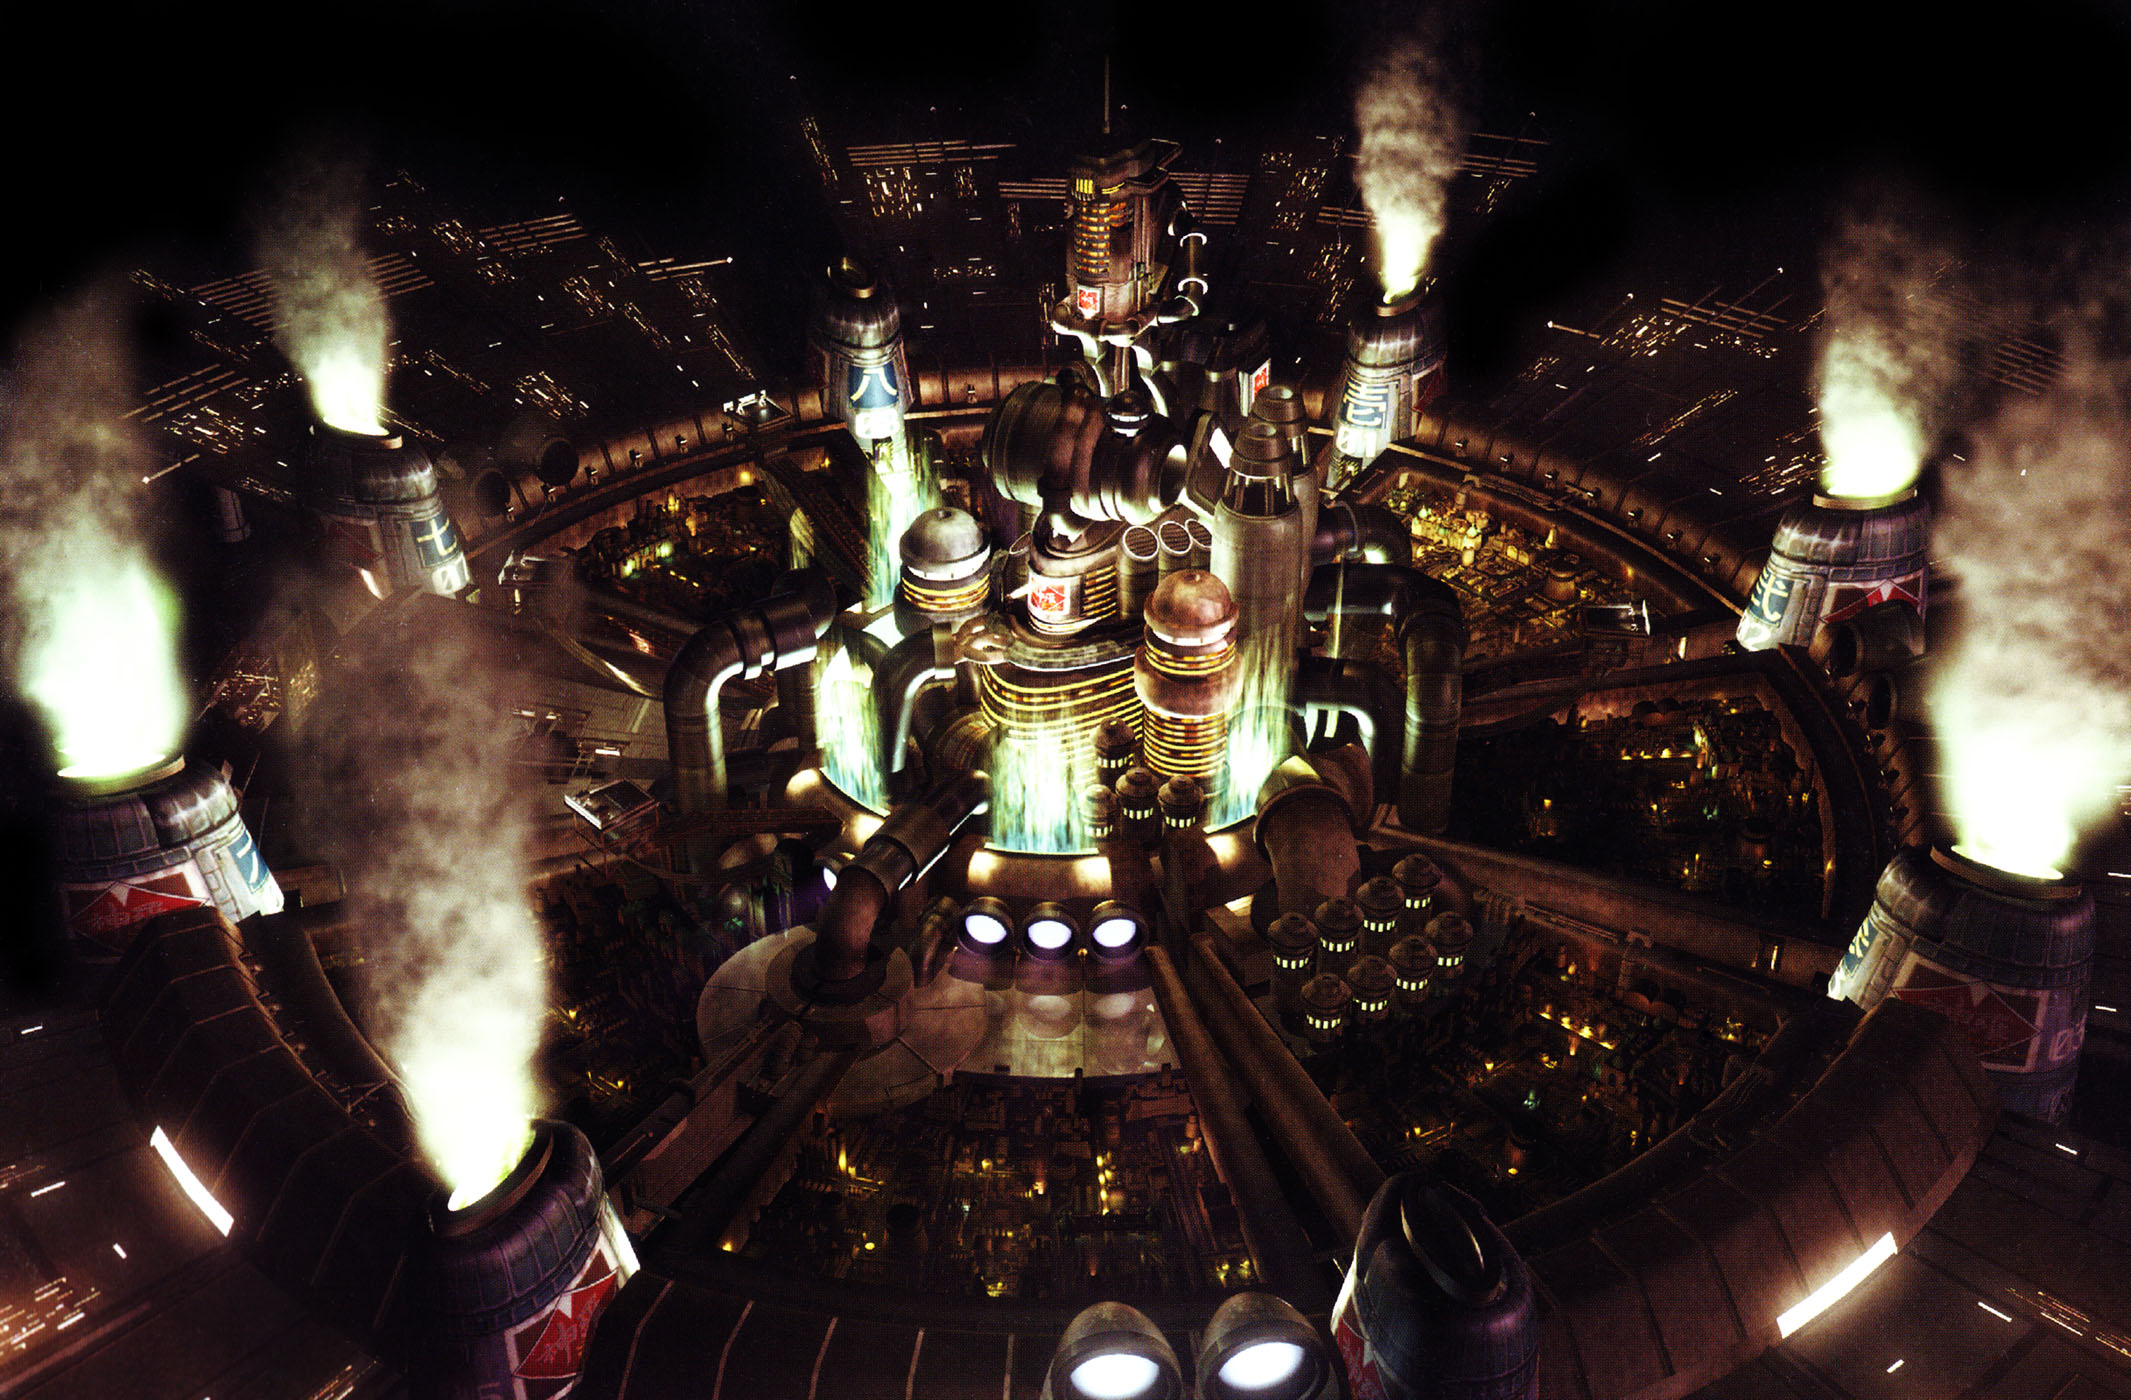 Video Game Final Fantasy VII HD Wallpaper | Background Image